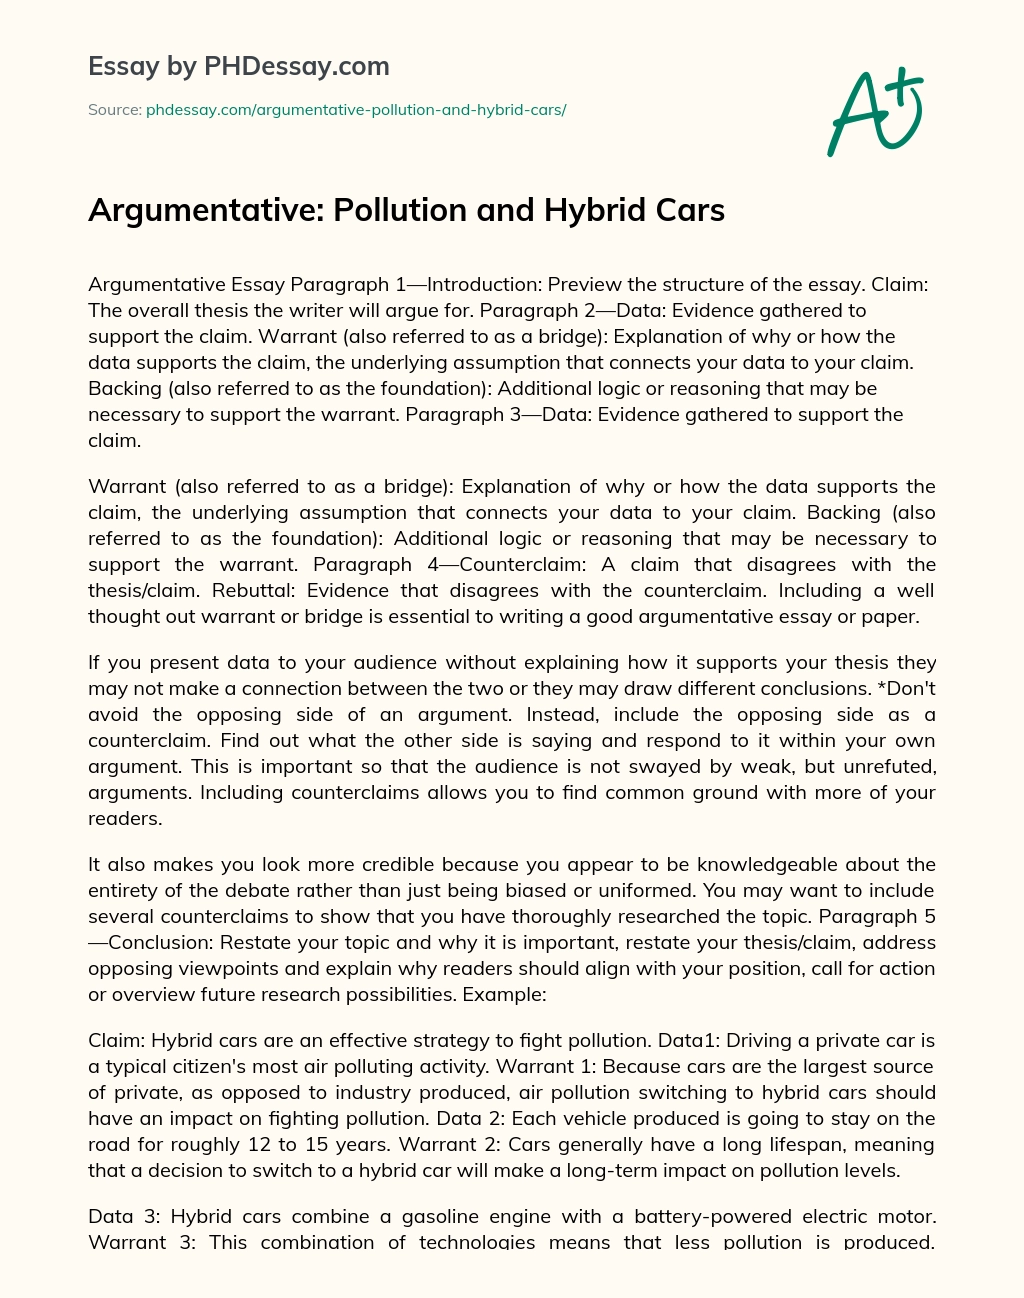 Argumentative: Pollution and Hybrid Cars essay